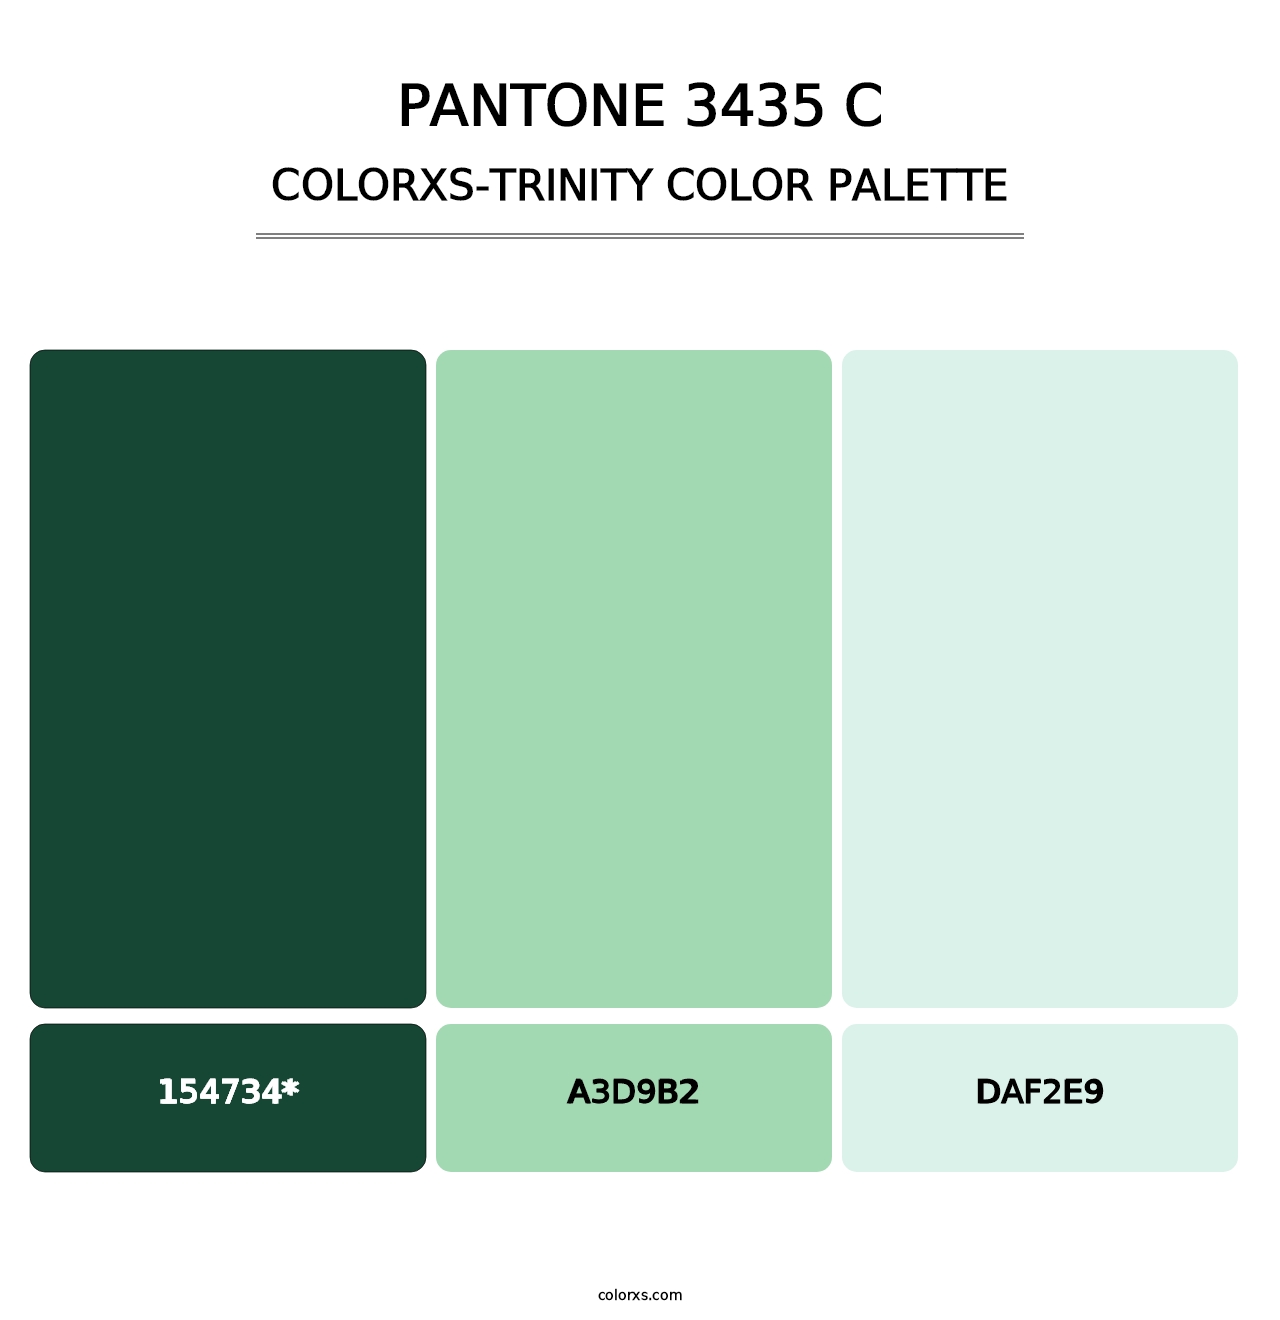 PANTONE 3435 C - Colorxs Trinity Palette